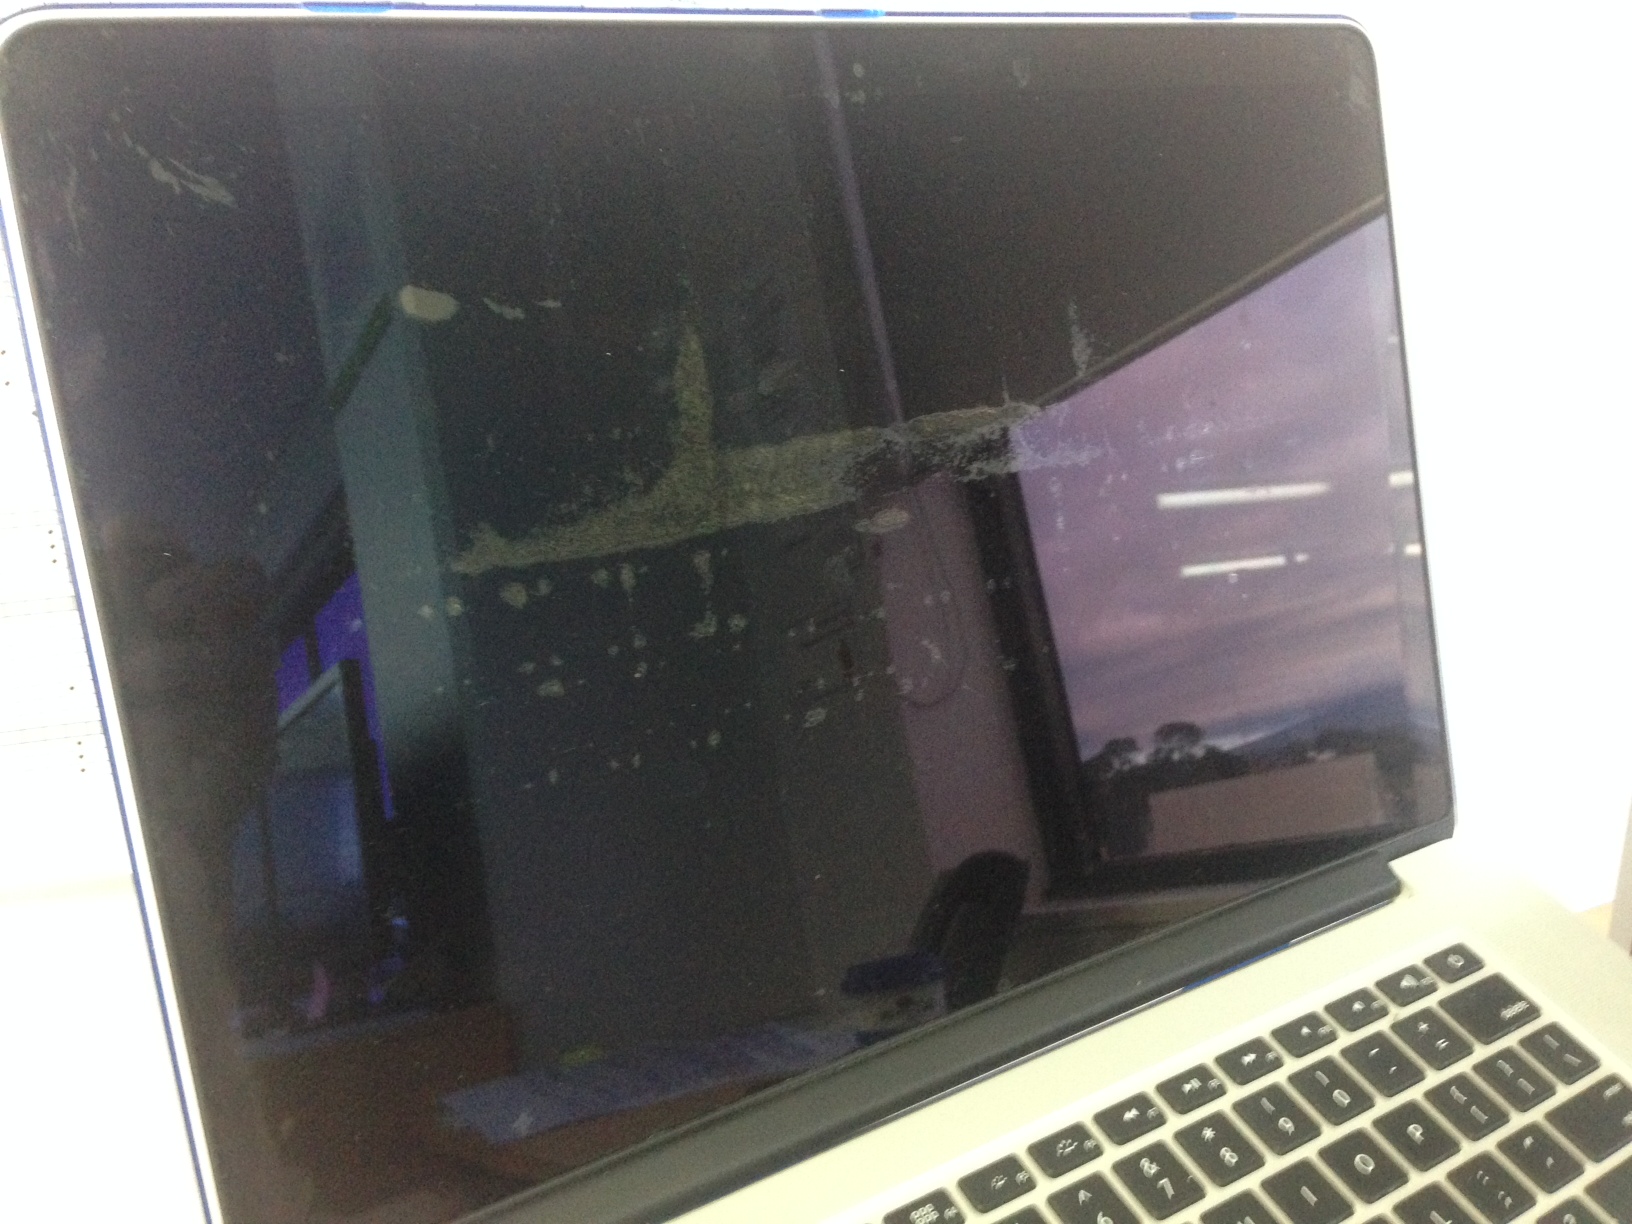 Macbook air retina display problems apple macbook with dvd